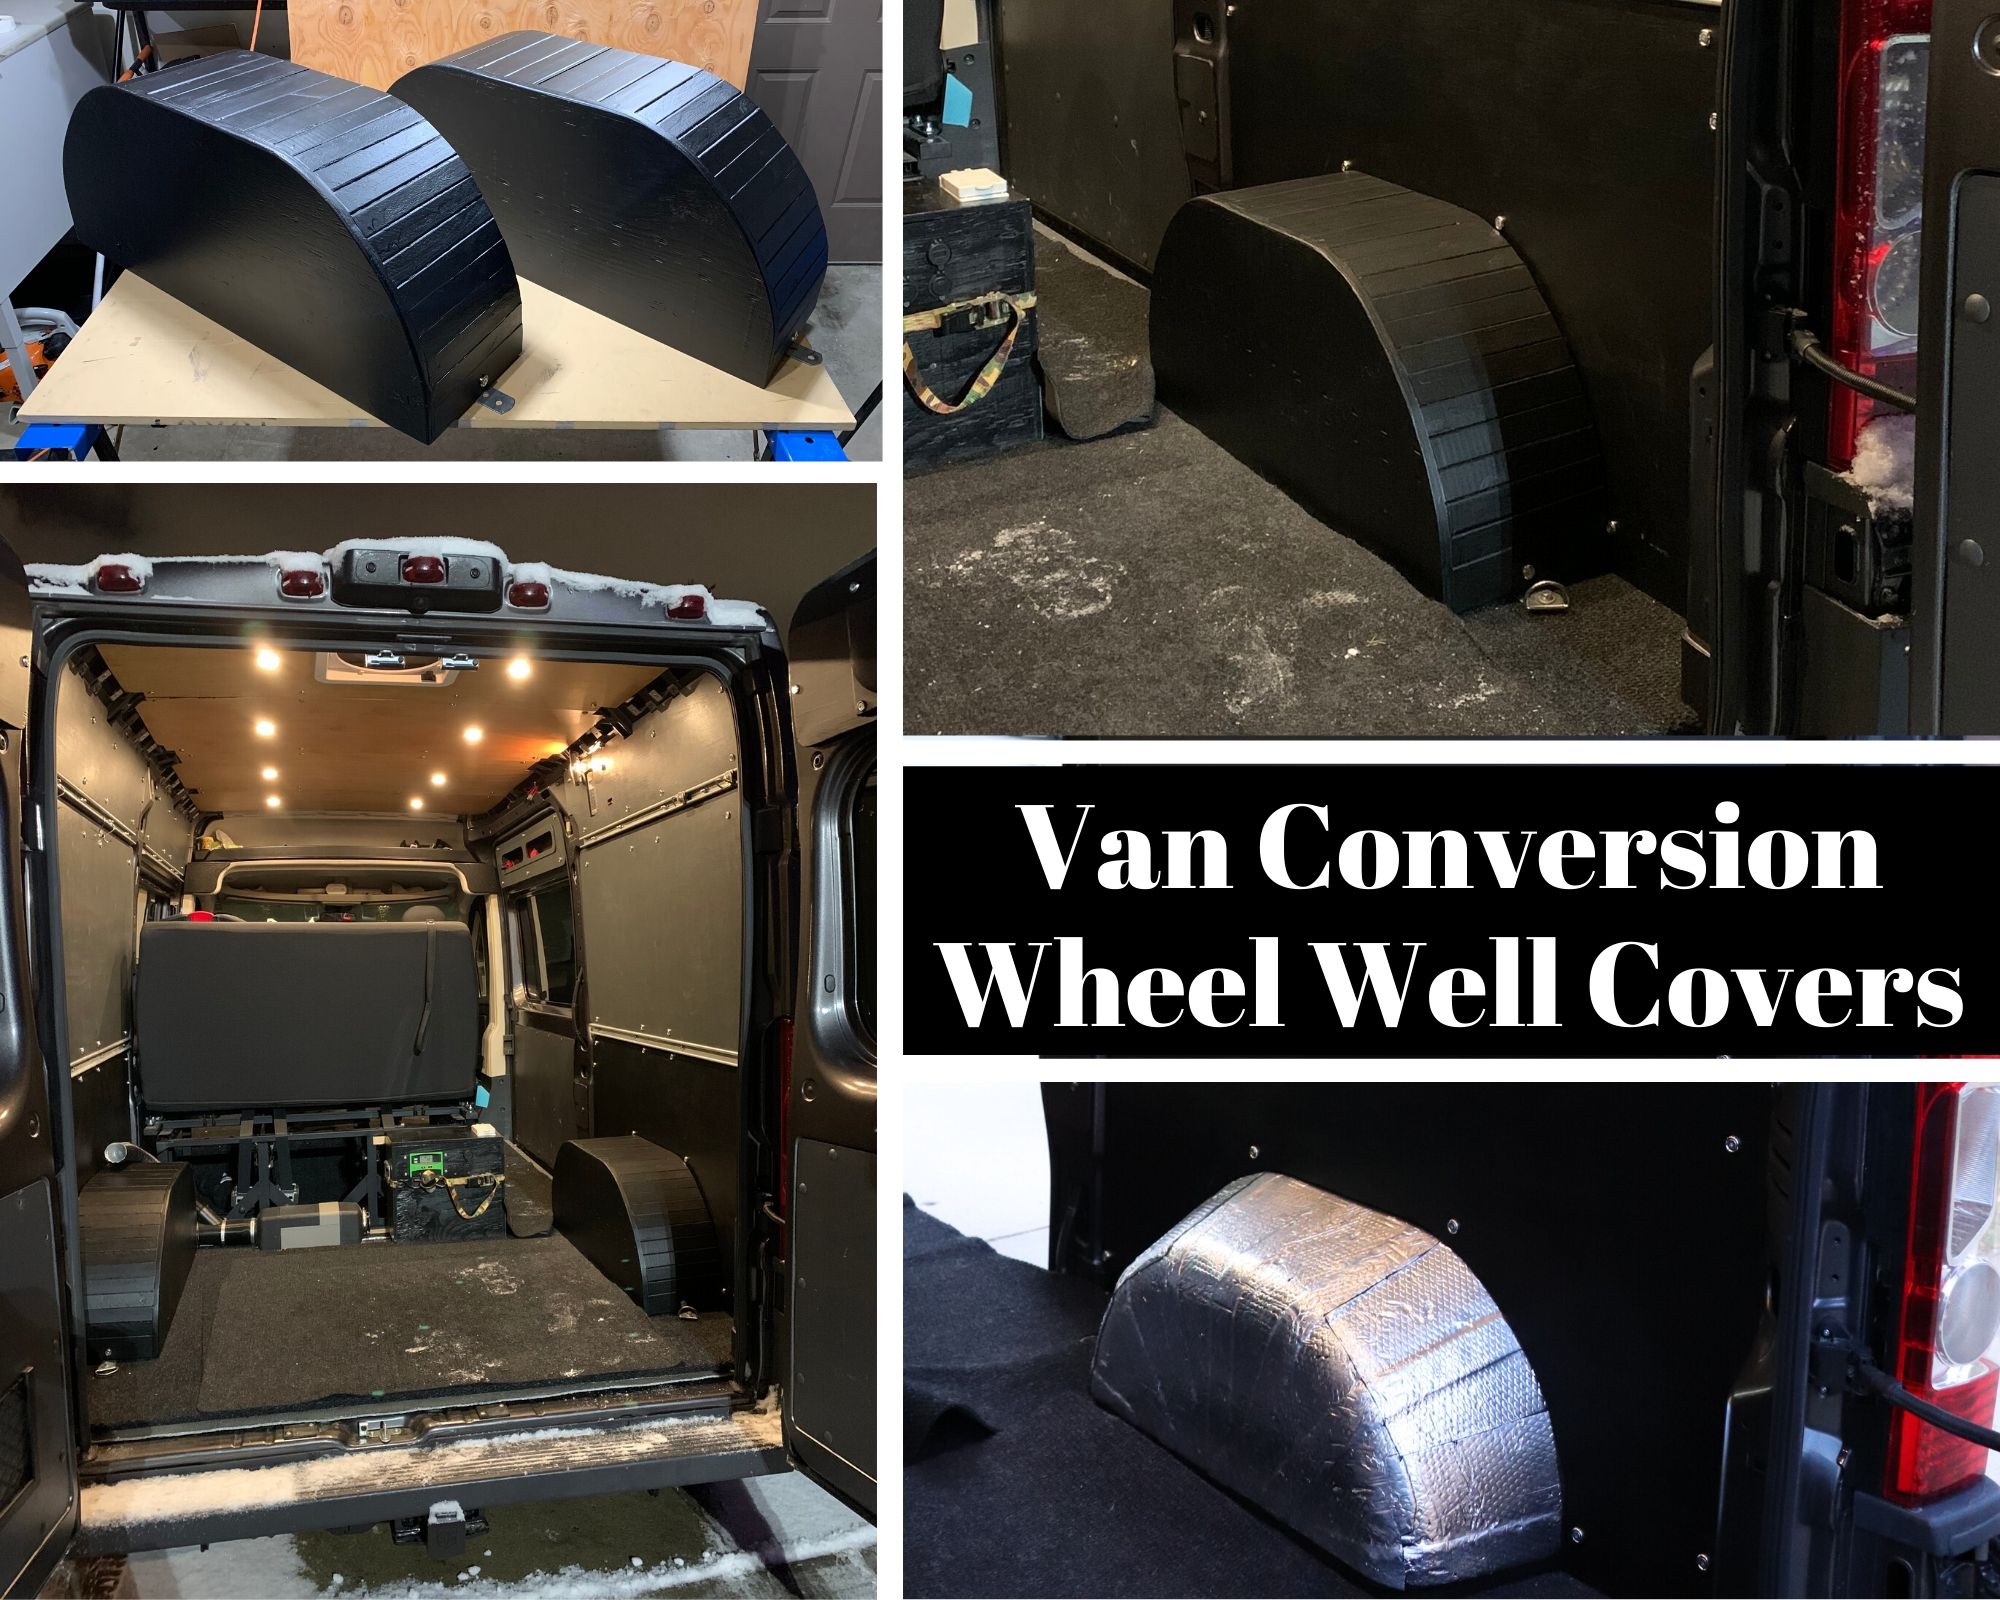 https://weekendervanlife.com/wp-content/uploads/2019/12/Van-Conversion-Wheel-Well-Covers.jpg